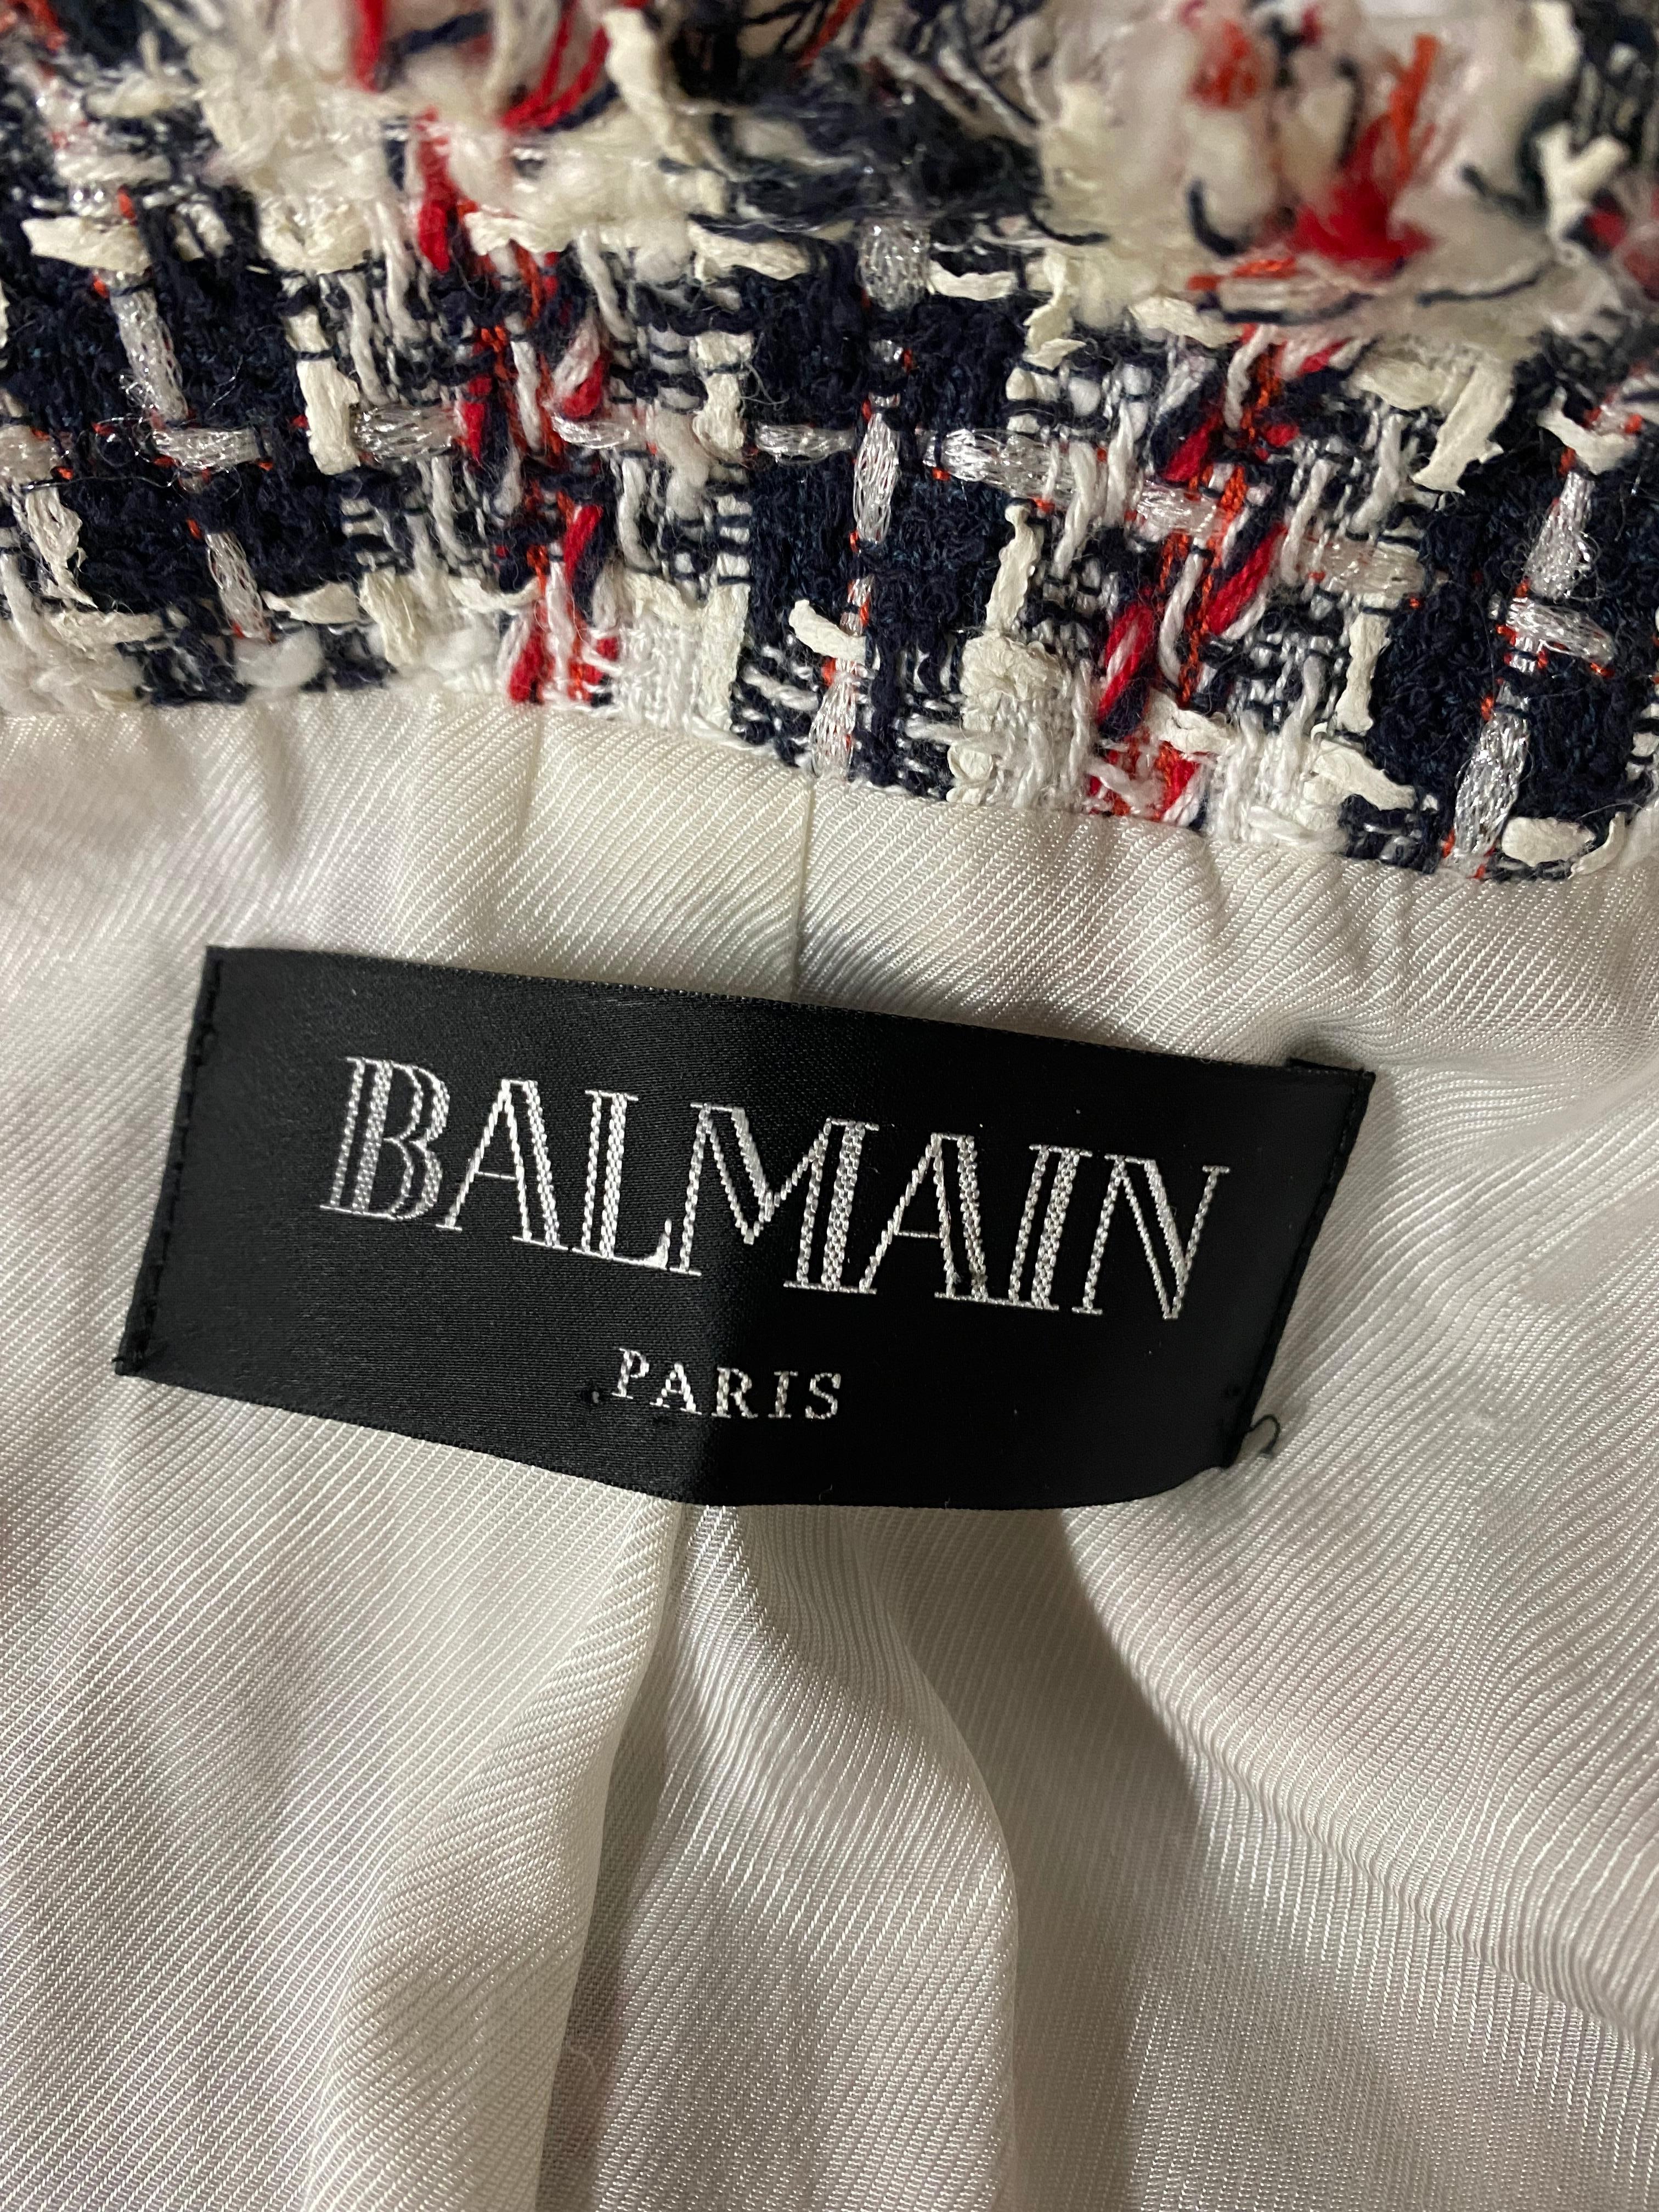 Balmain Multicolored Tweed Blazer Jacket For Sale 4